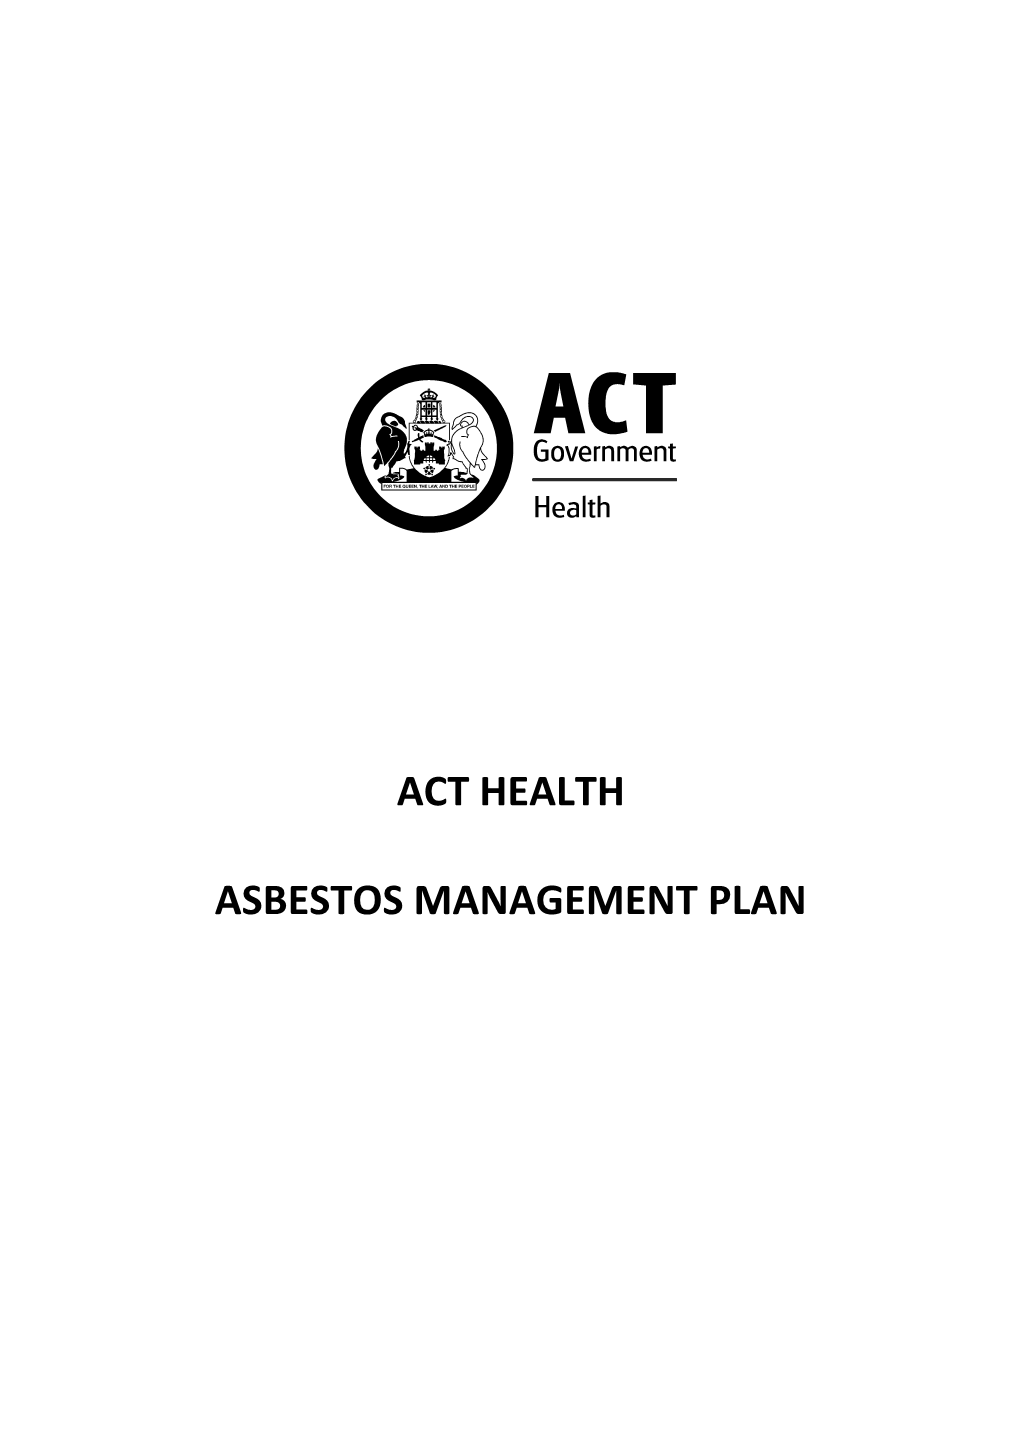 Asbestos Management Plan - ACT Health